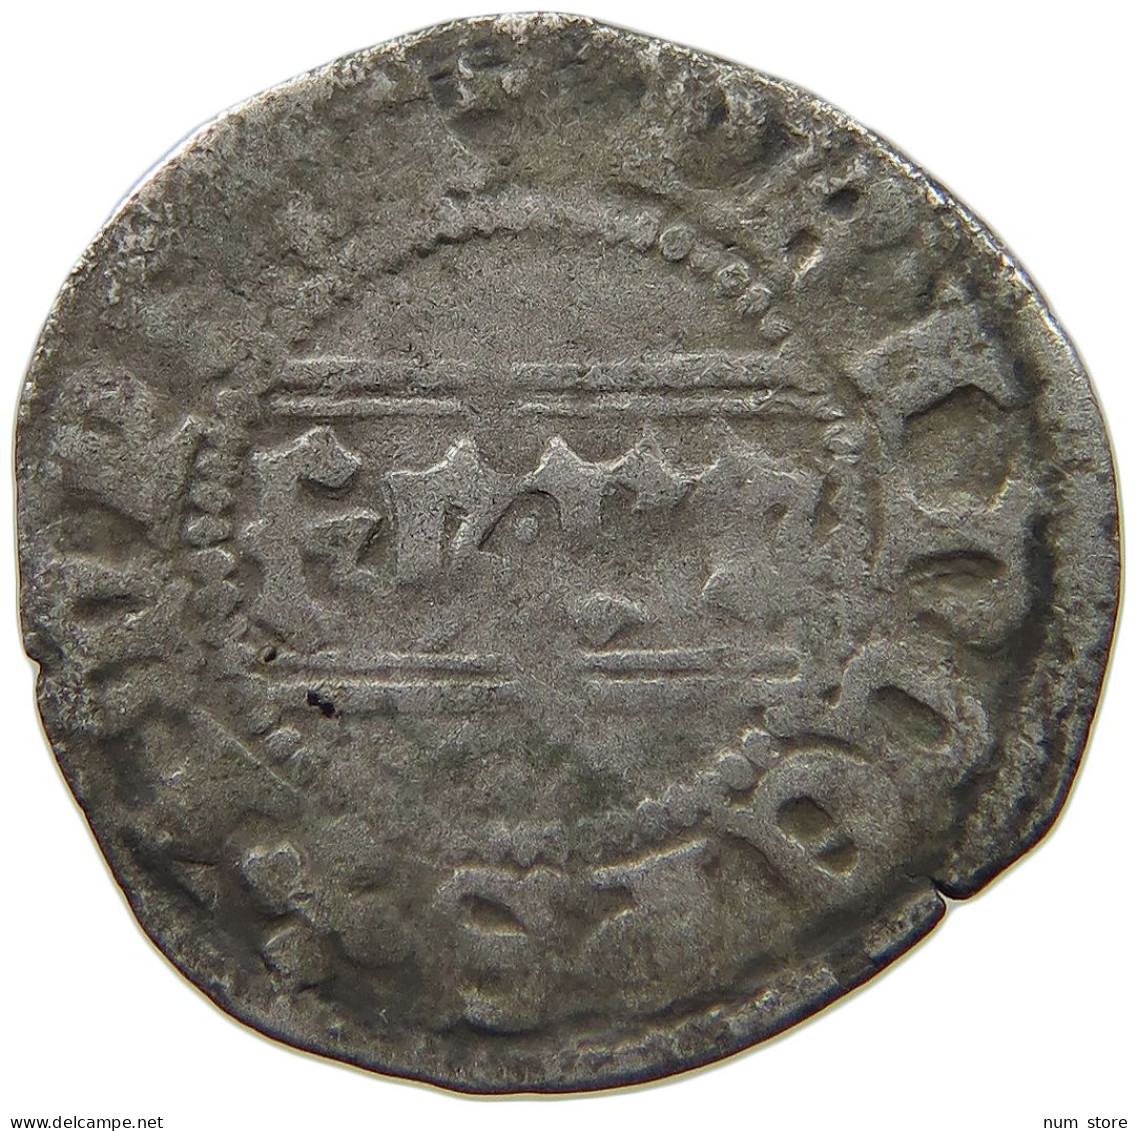 ITALY SAVOY SAVOIE QUART DE GROSS 1434 -1465 GENÈVE, L'ATELIER DE CORNAVIN. LOUIS I, 1434 -1465.  #MA 024939 - Piemonte-Sardegna, Savoia Italiana